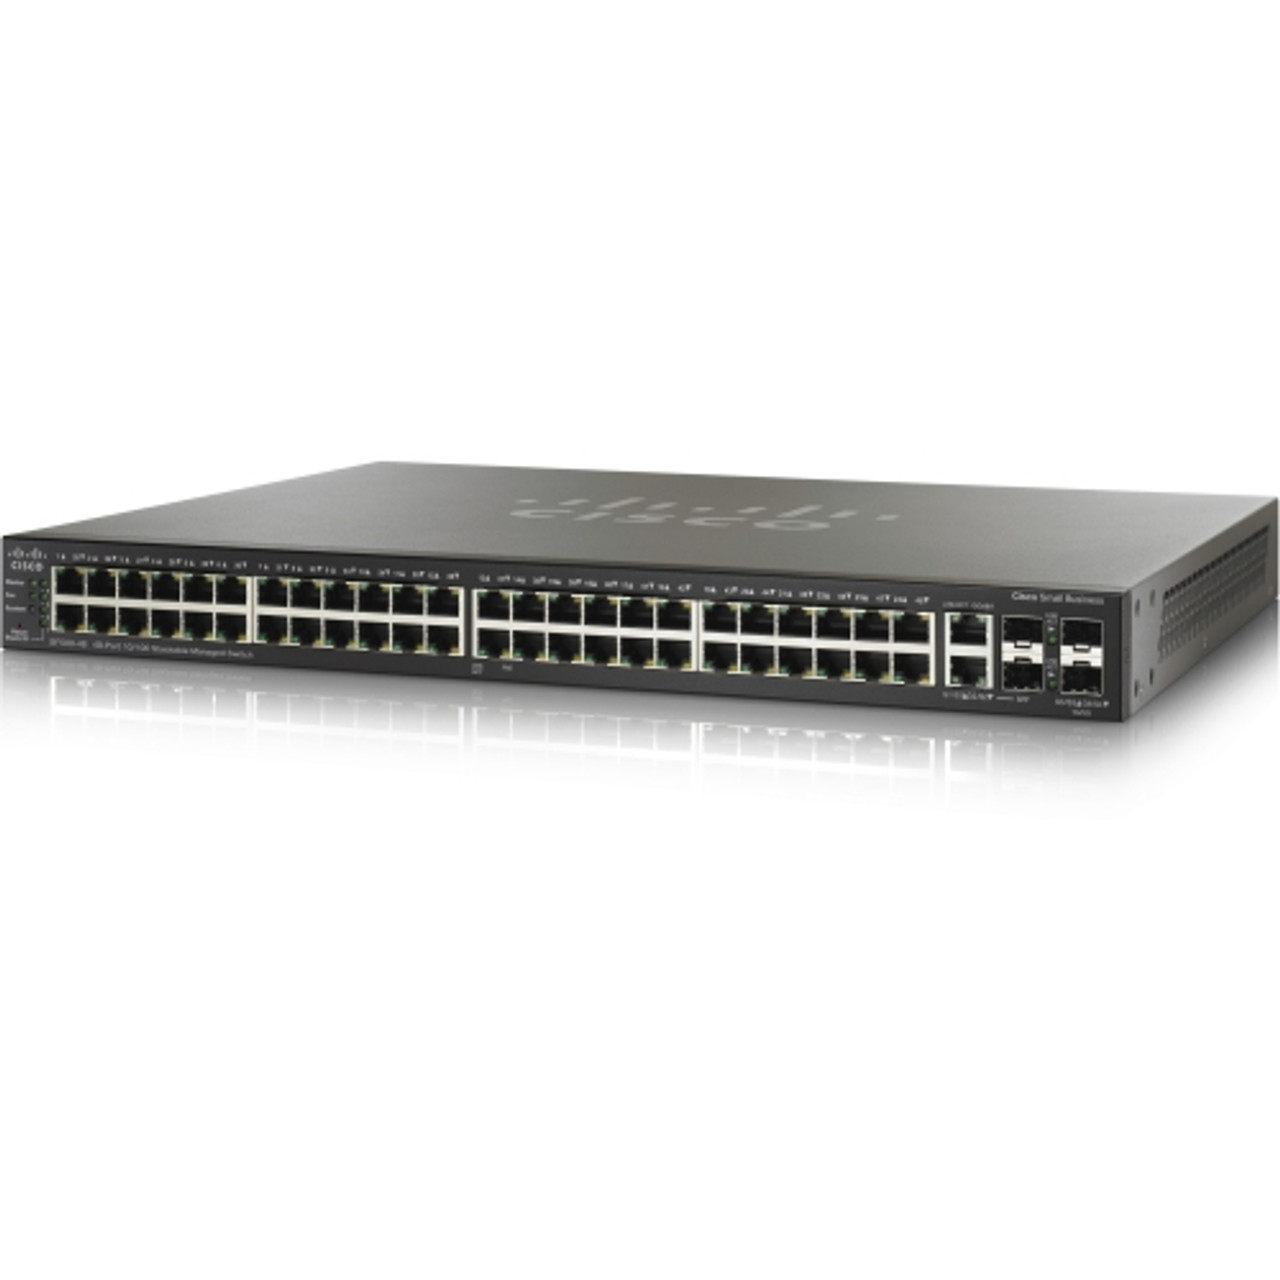 SF500-48-K9-BR Cisco 48-Ports 10/100 Stackable Managed Switch with Gigabit Uplinks (Refurbished)